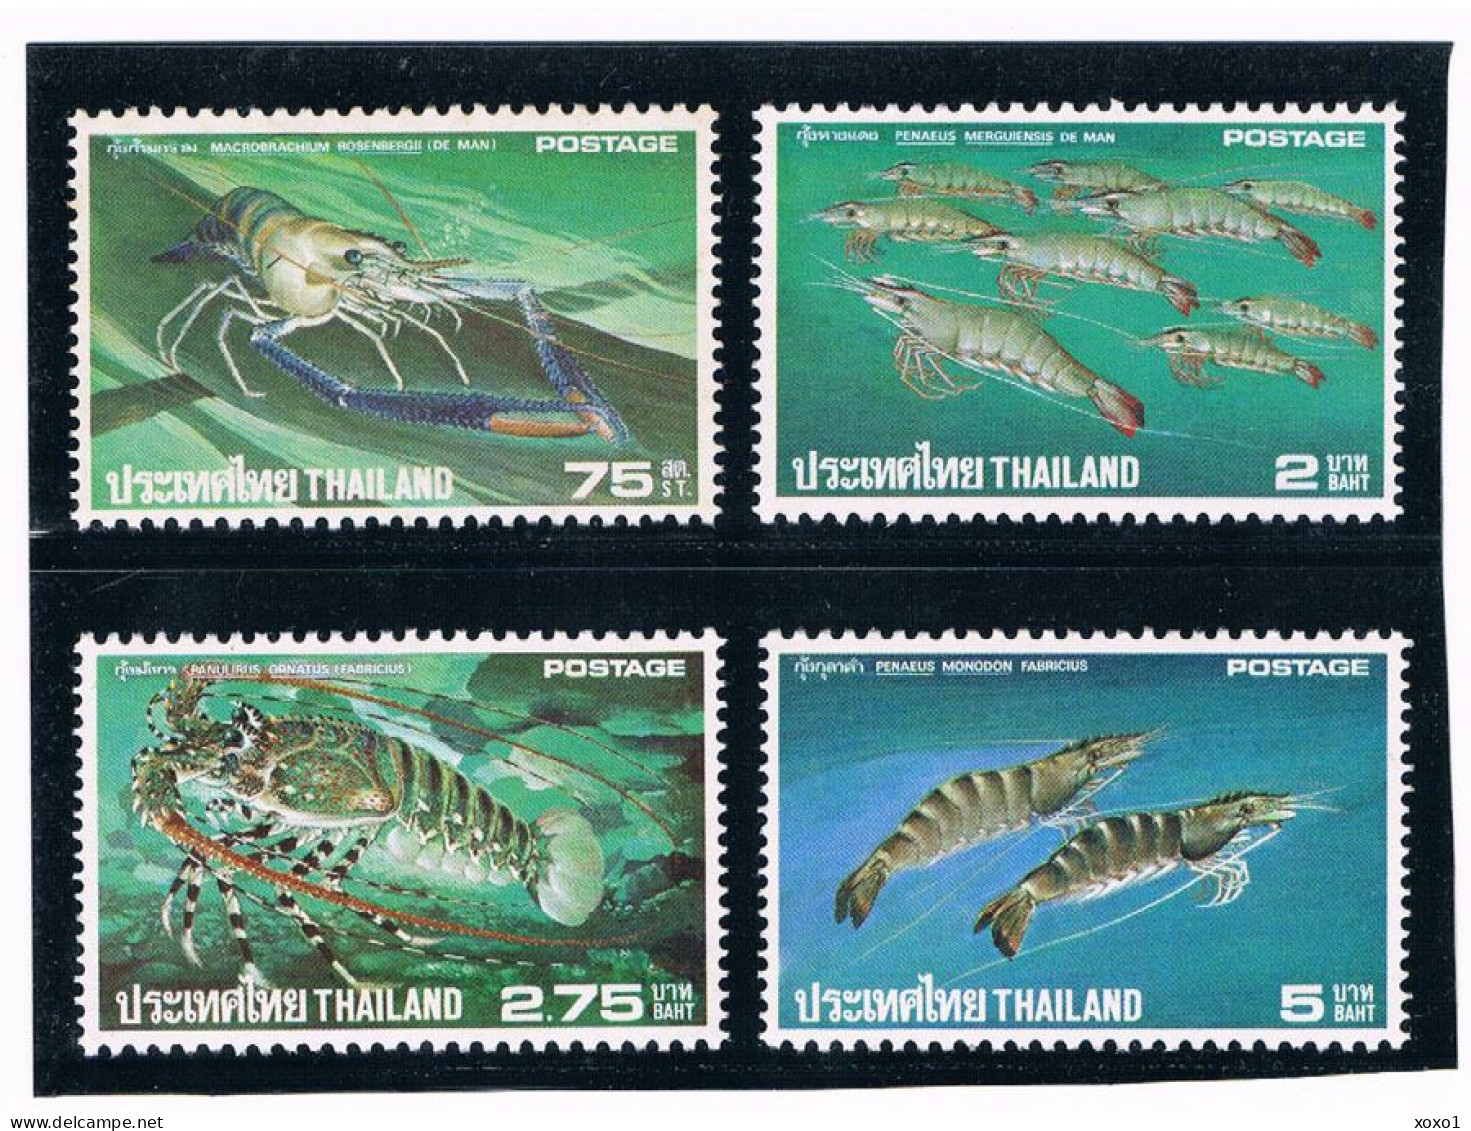 Thailand 1976 MiNr. 799 - 802 Marine Life, Crustaceans, Shrimps 4v MNH** 25,00 € - Crustaceans